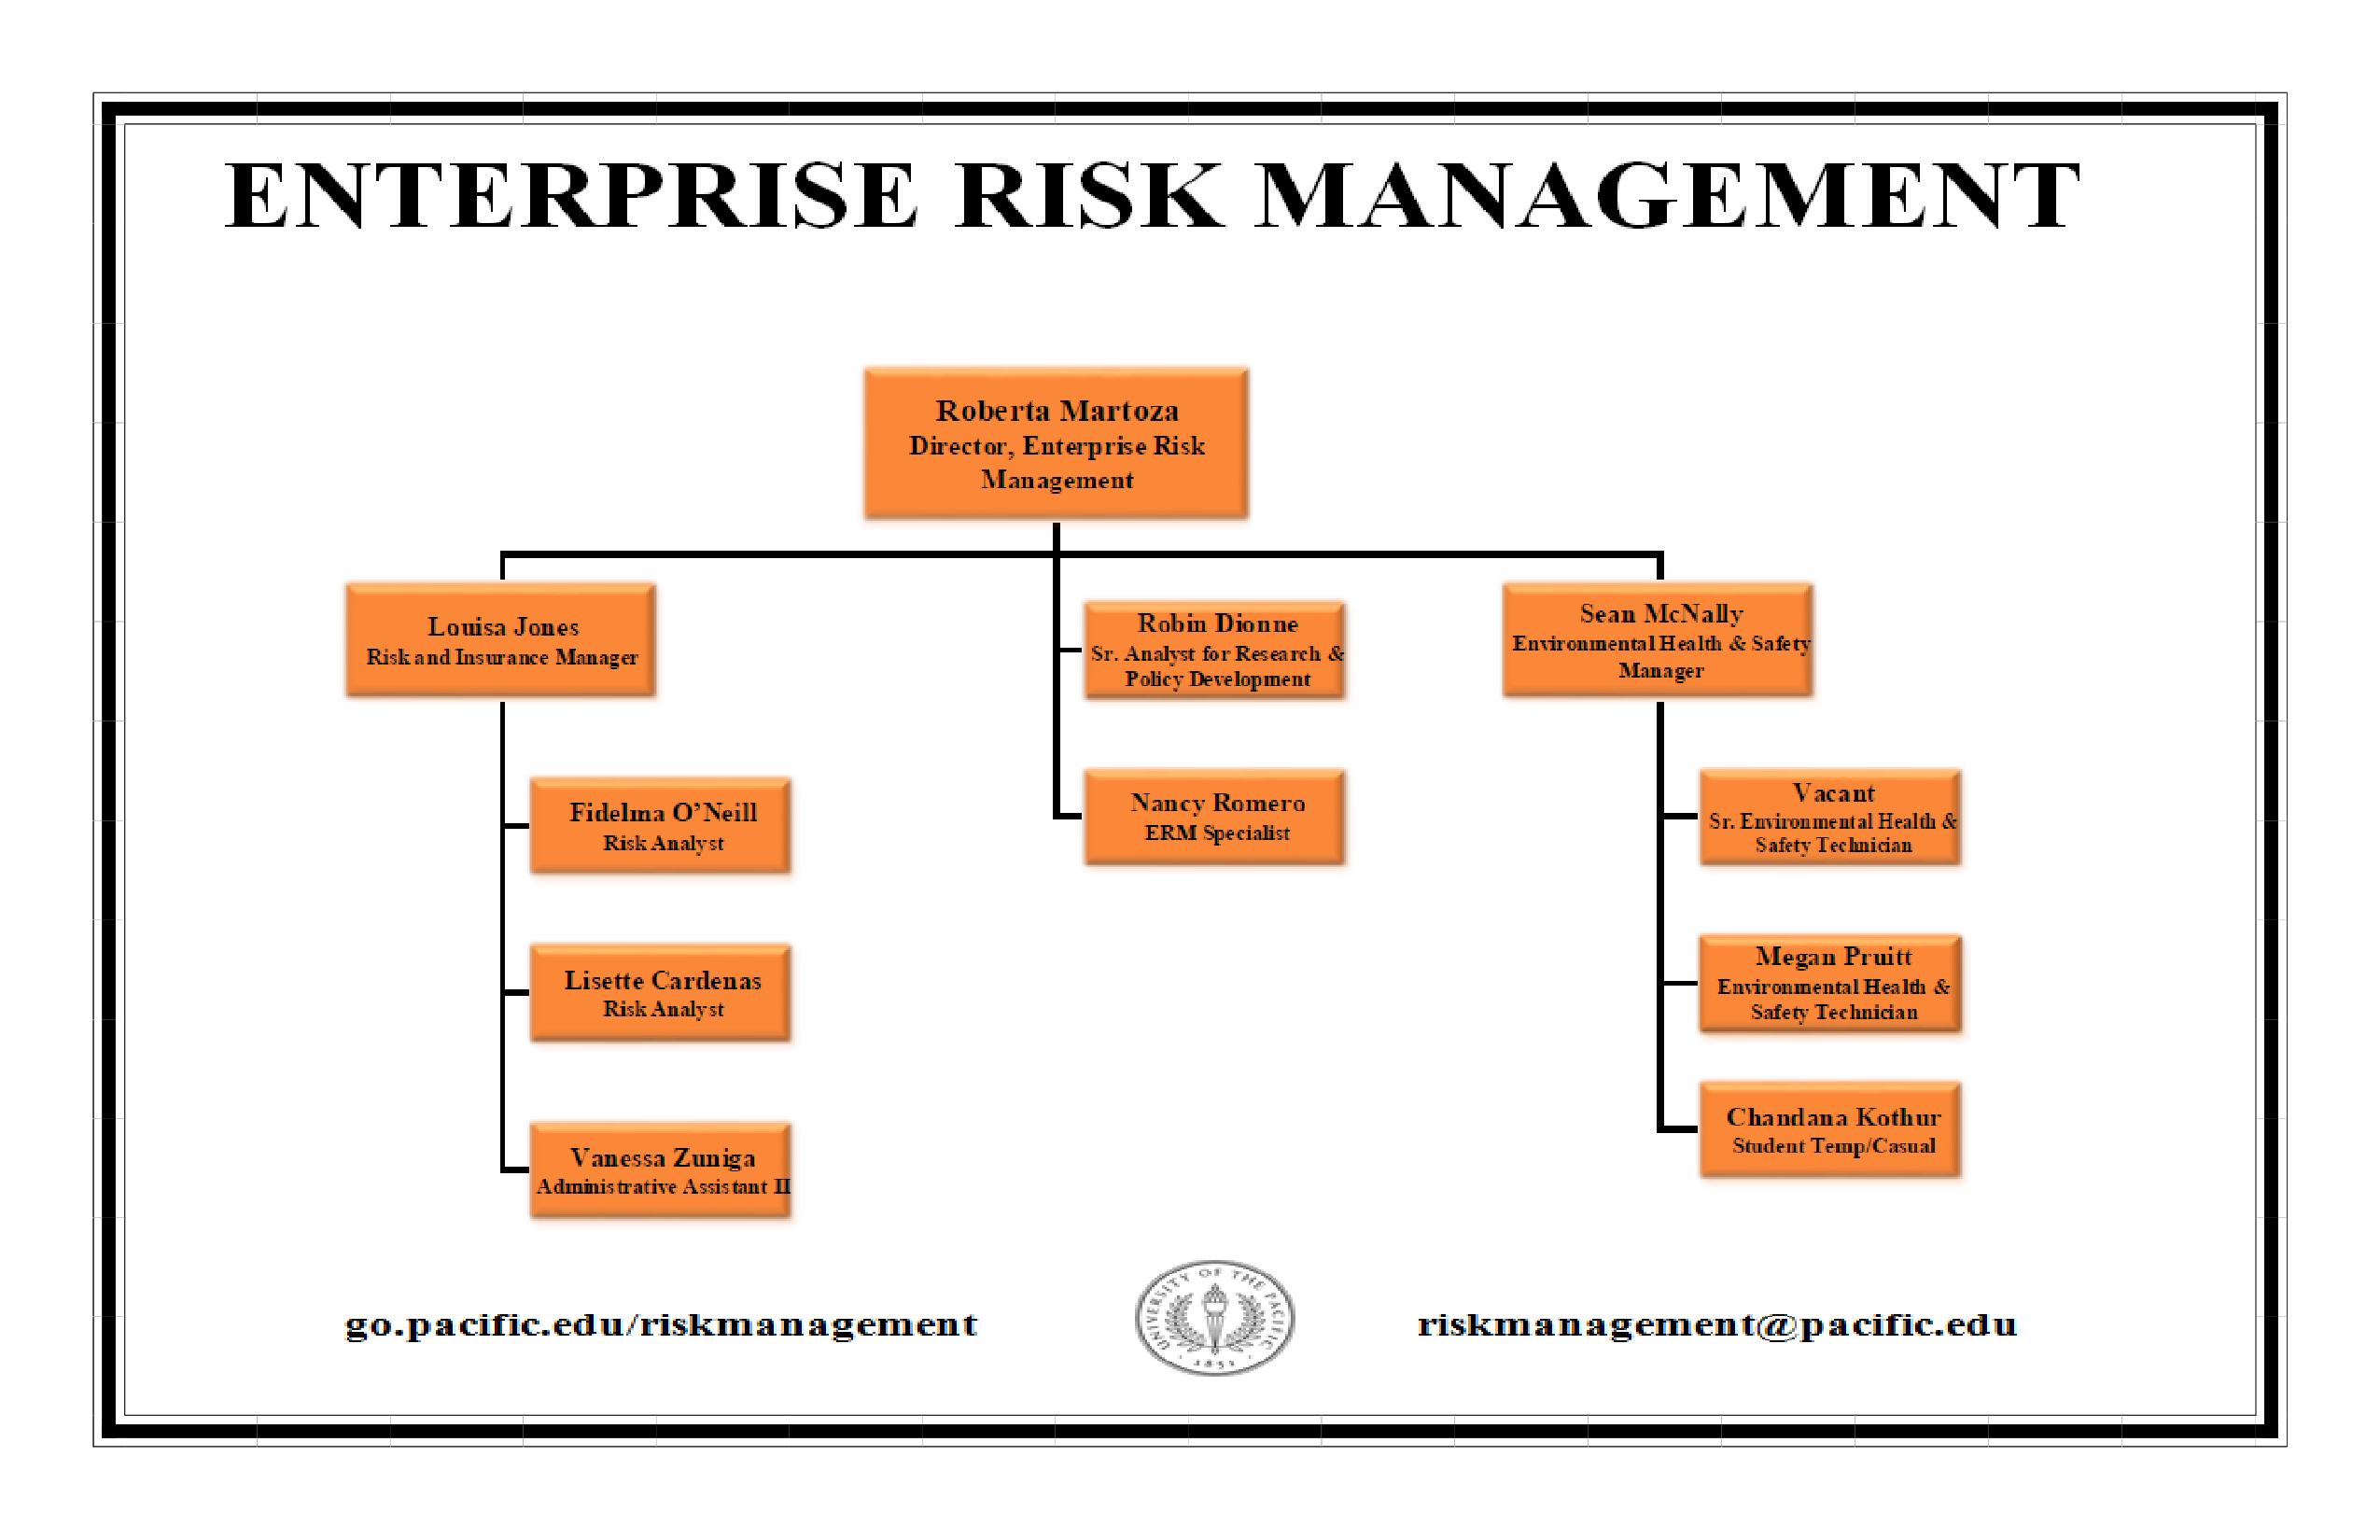 Enterprise Risk Management Organizational Chart main image